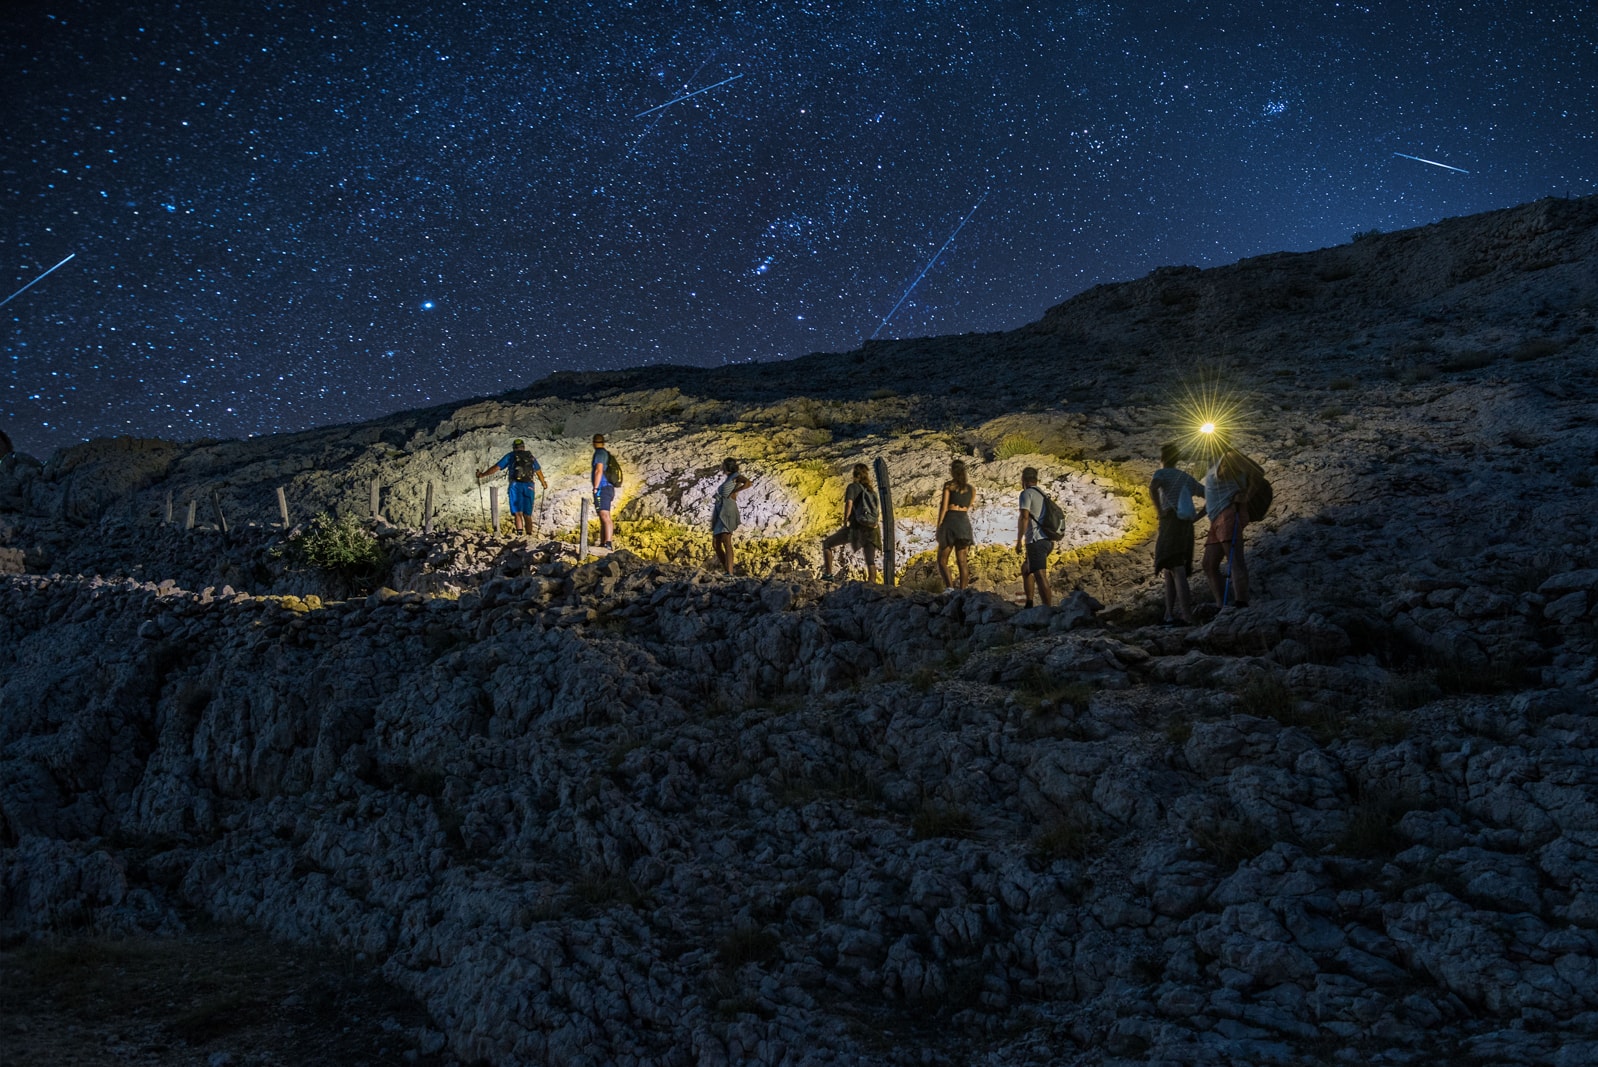 Activity – Night Hike - Life on Mars